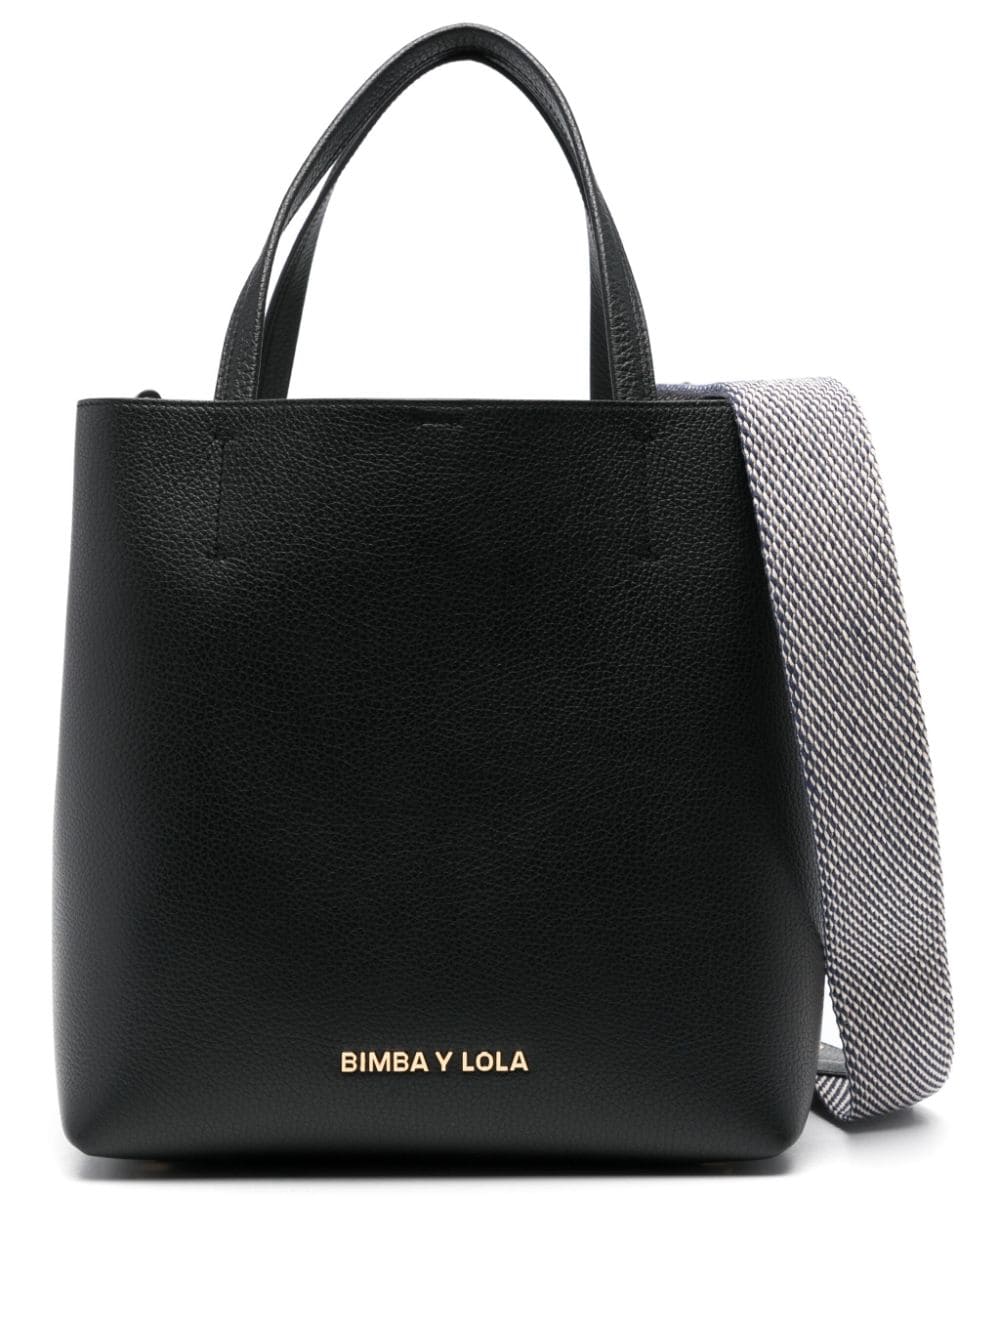 Bimba y Lola large Chihuahua leather tote bag - Black von Bimba y Lola